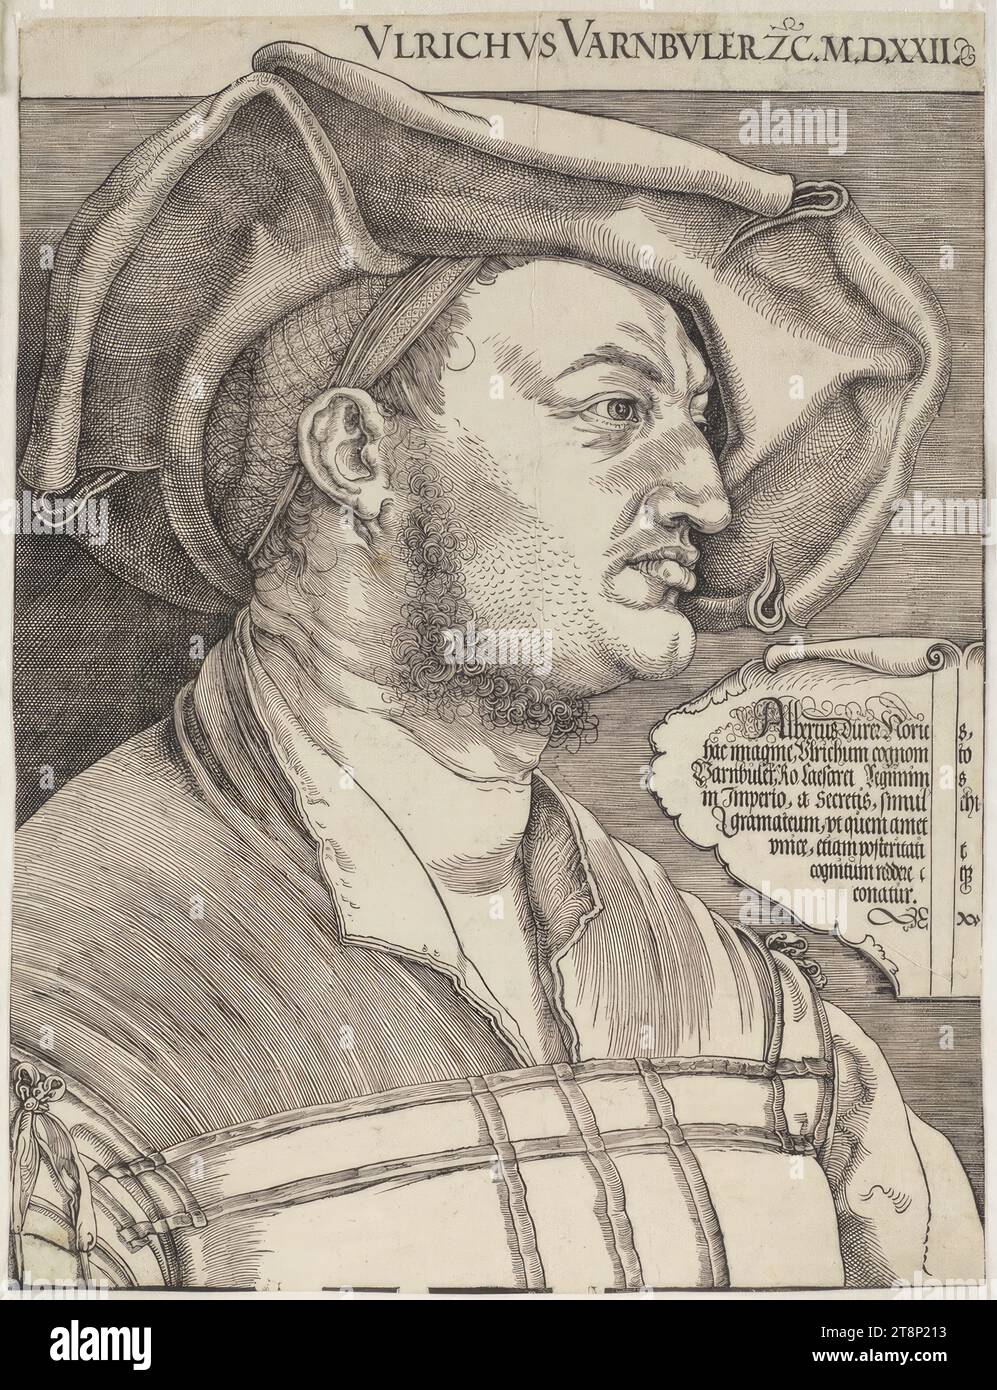 Ulrich Varnbüler, Albrecht Dürer (Norimberga 1471 - 1528 Norimberga), 1522, stampa, taglio su legno; la lastra è rifilata, foglio: 42,8 x 32,6 cm, r.o. 'VLRICHVS VARNBVLER ZC.M.D.XXII.'; M.r.: 'Albertus durer Noric[u]s, hac Imagine, Vlrichum cognom[en]to, Varnbuler, RO. Caesarei Regiminis, in Imperio, a Secretis, simul[ar]chi, gramateum, vt quem amet, vnice, etiam posteriati [vul]t/ cognitum reddere c[oler]eque, conatur.” (Albrecht Dürer di Norimberga vorrebbe usare questa foto per far conoscere ai posteri il segreto e capo scriba del governo imperiale romano, Ulrico Foto Stock